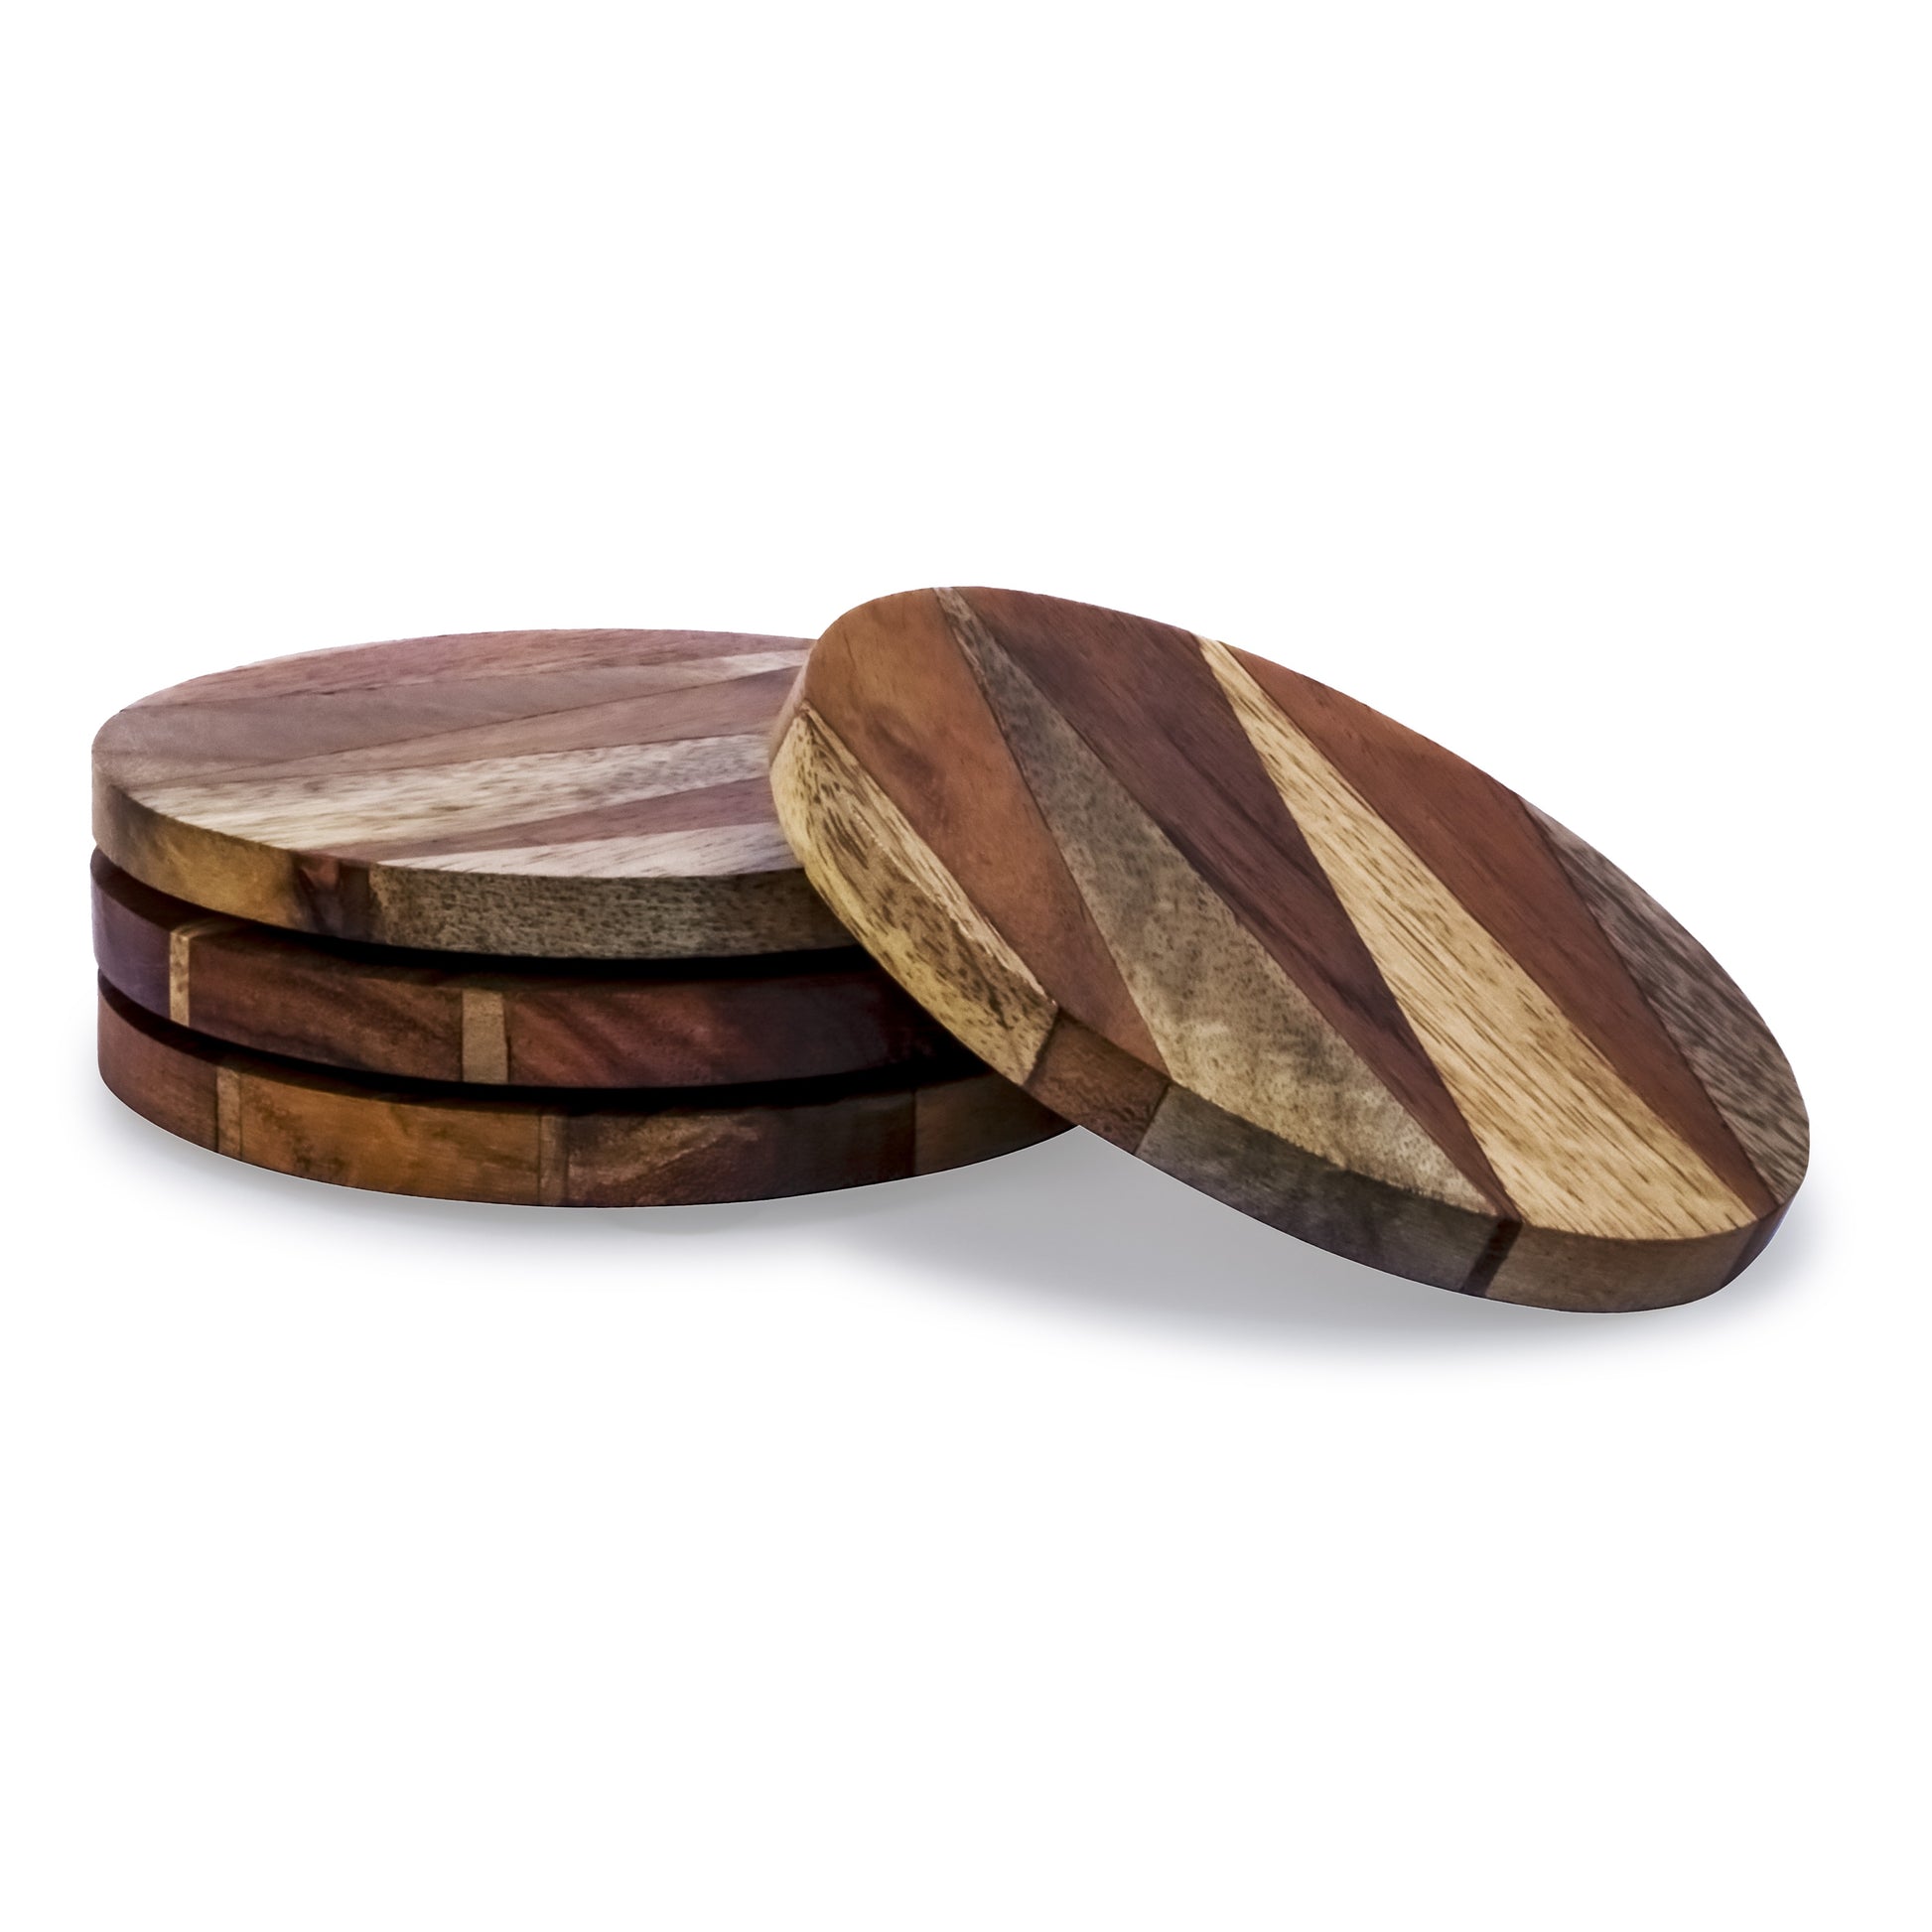 Set of 4 Round Acacia Wood Coasters